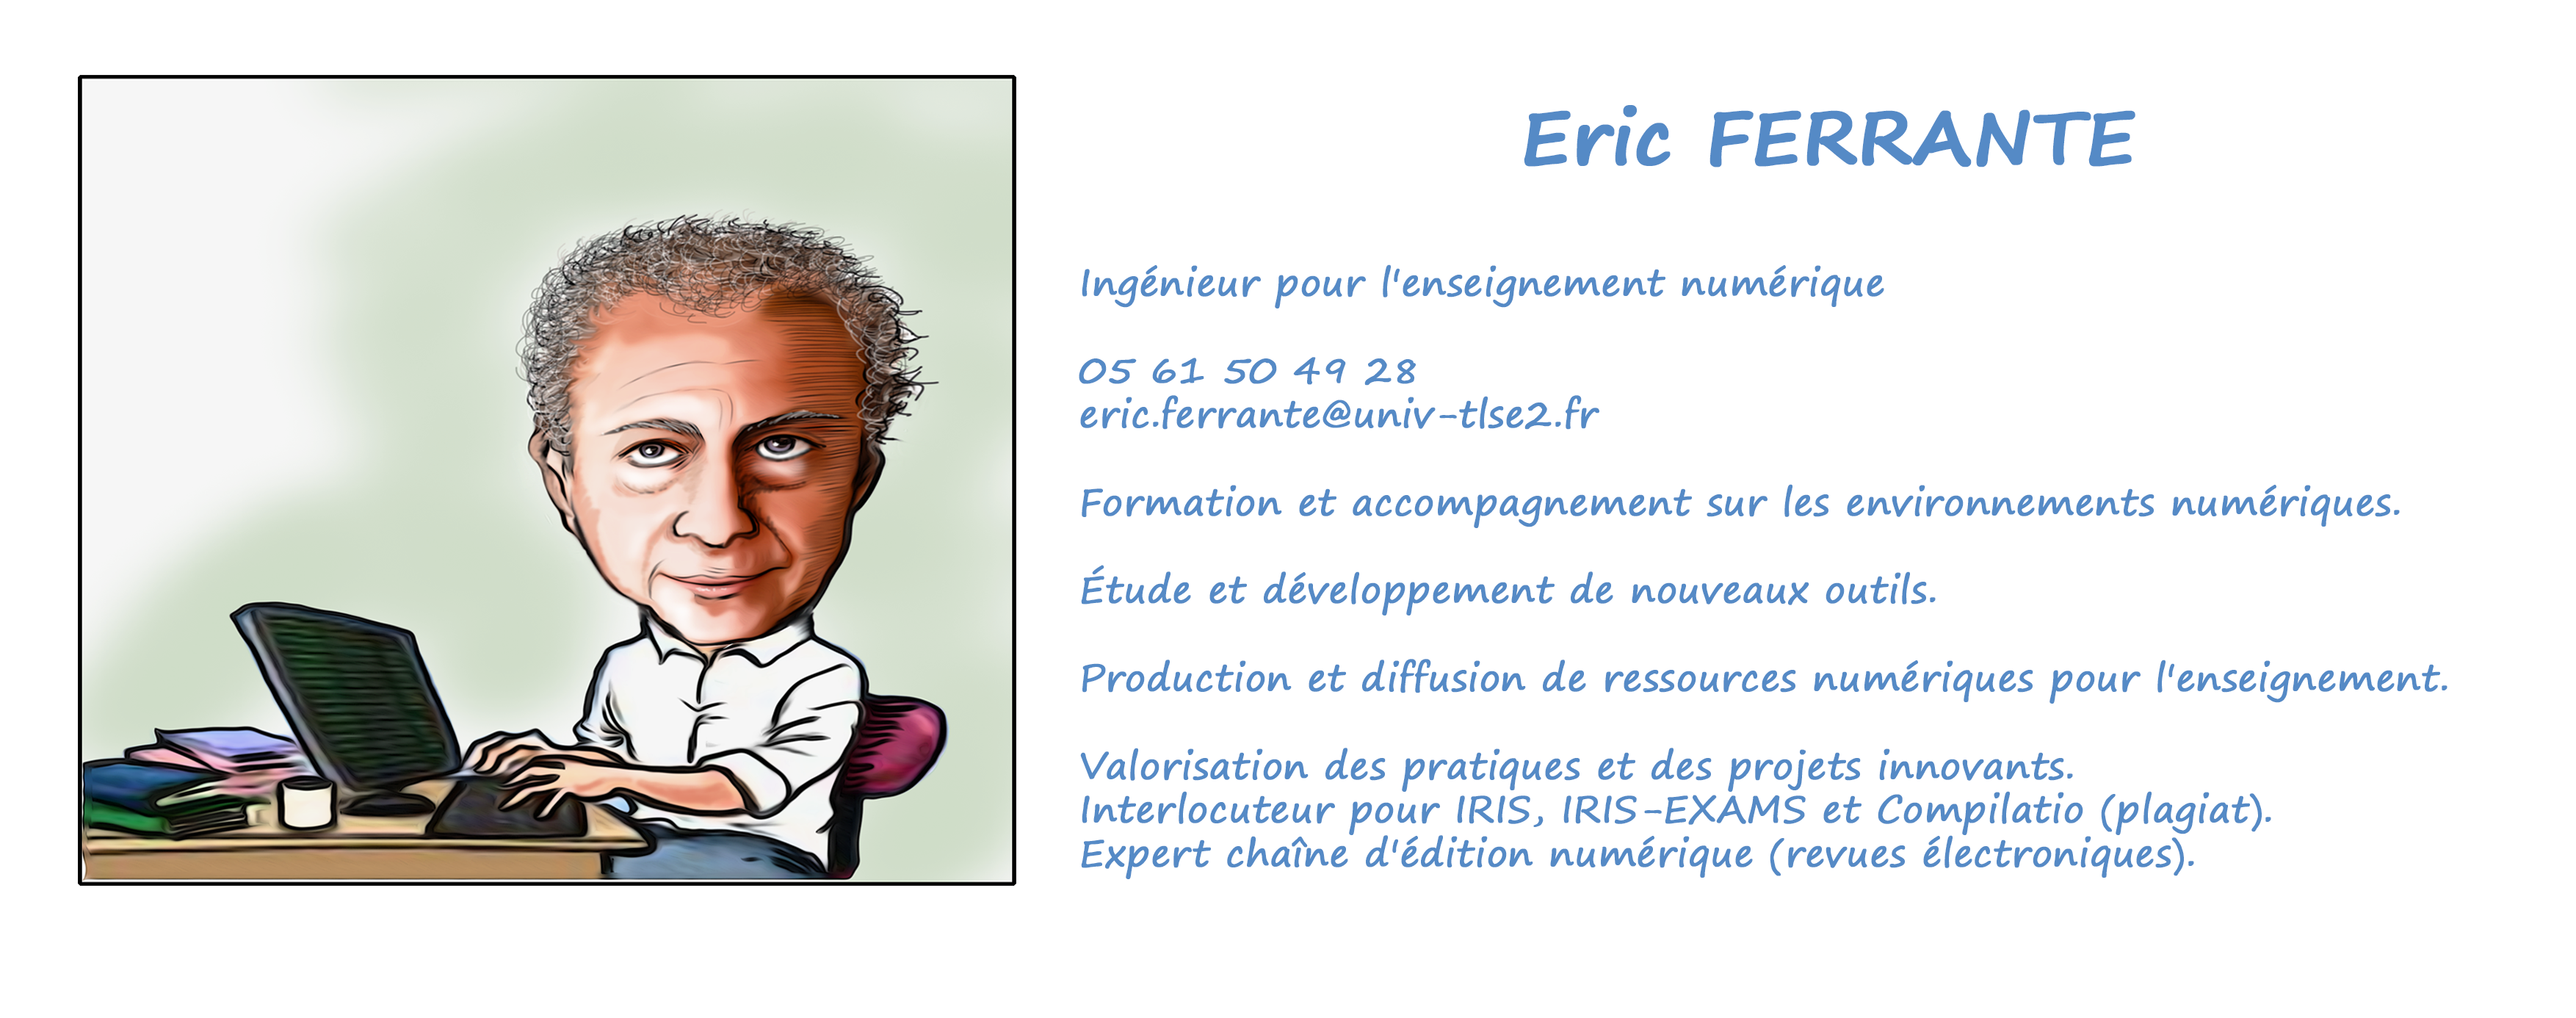 Trombinoscope : Eric Ferrante